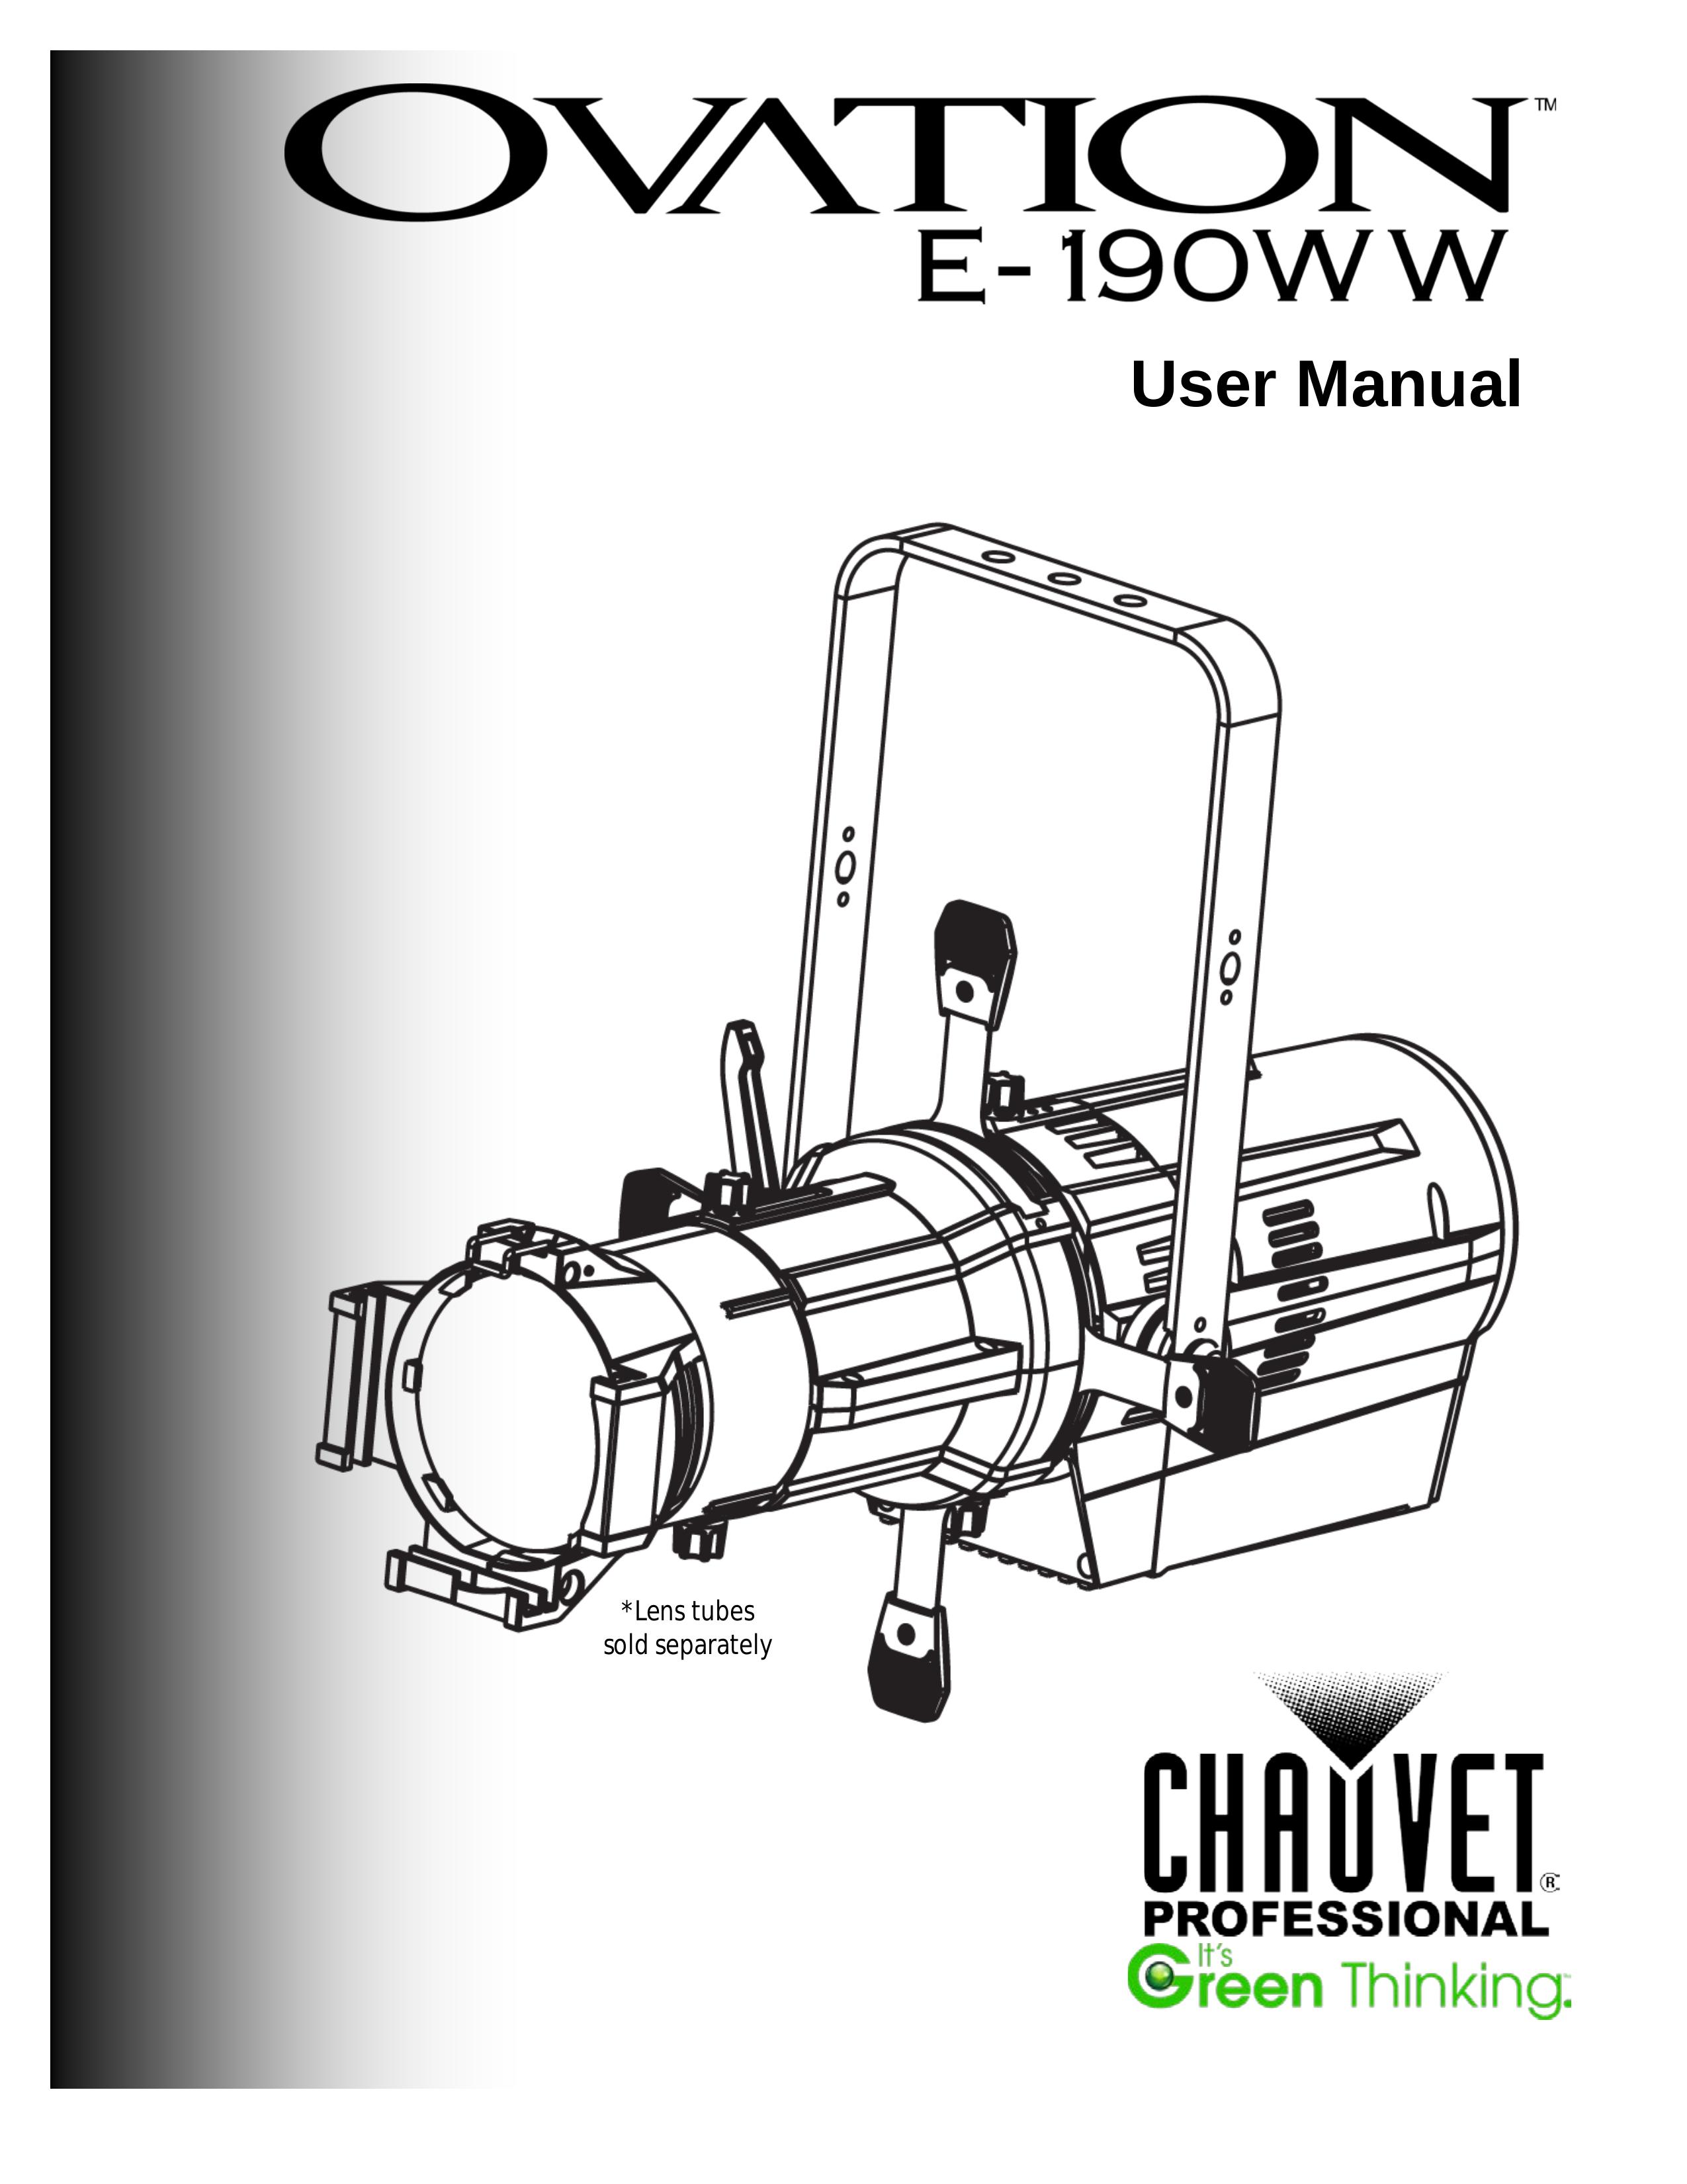 Chauvet E-190WW Landscape Lighting User Manual